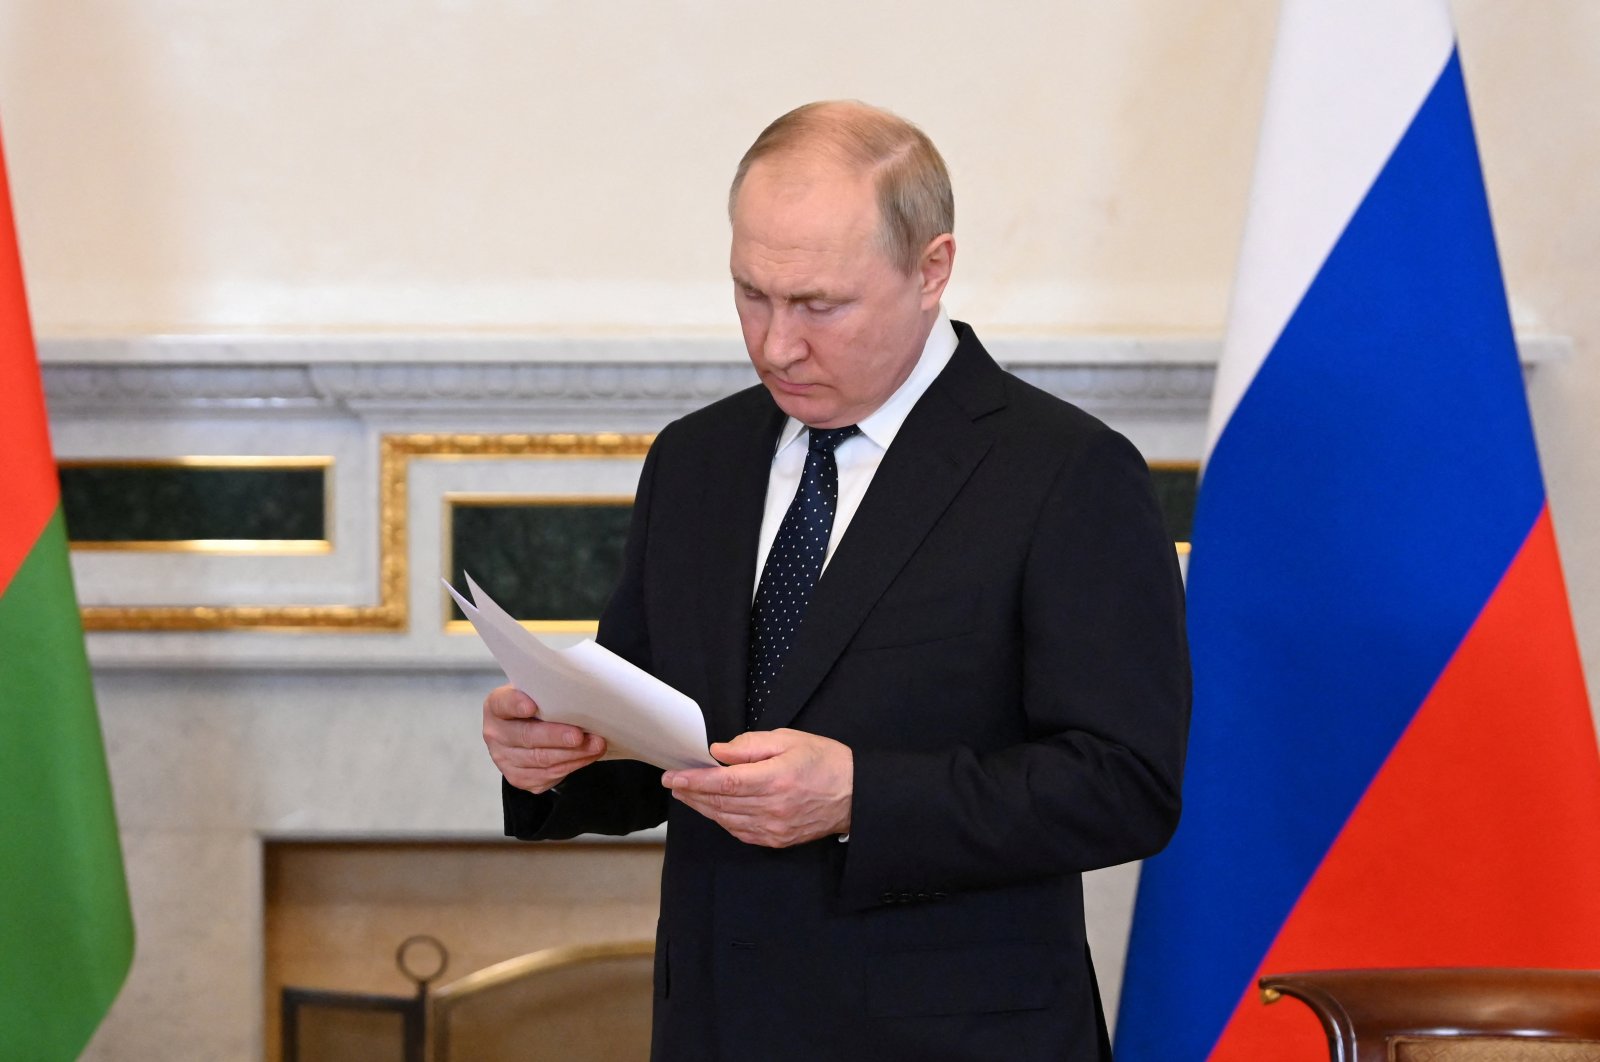 Russian President Vladimir Putin attends a meeting with his Belarusian counterpart Alexander Lukashenko in Saint Petersburg, Russia, June 25, 2022. (Sputnik/Maxim Blinov/Kremlin via Reuters)